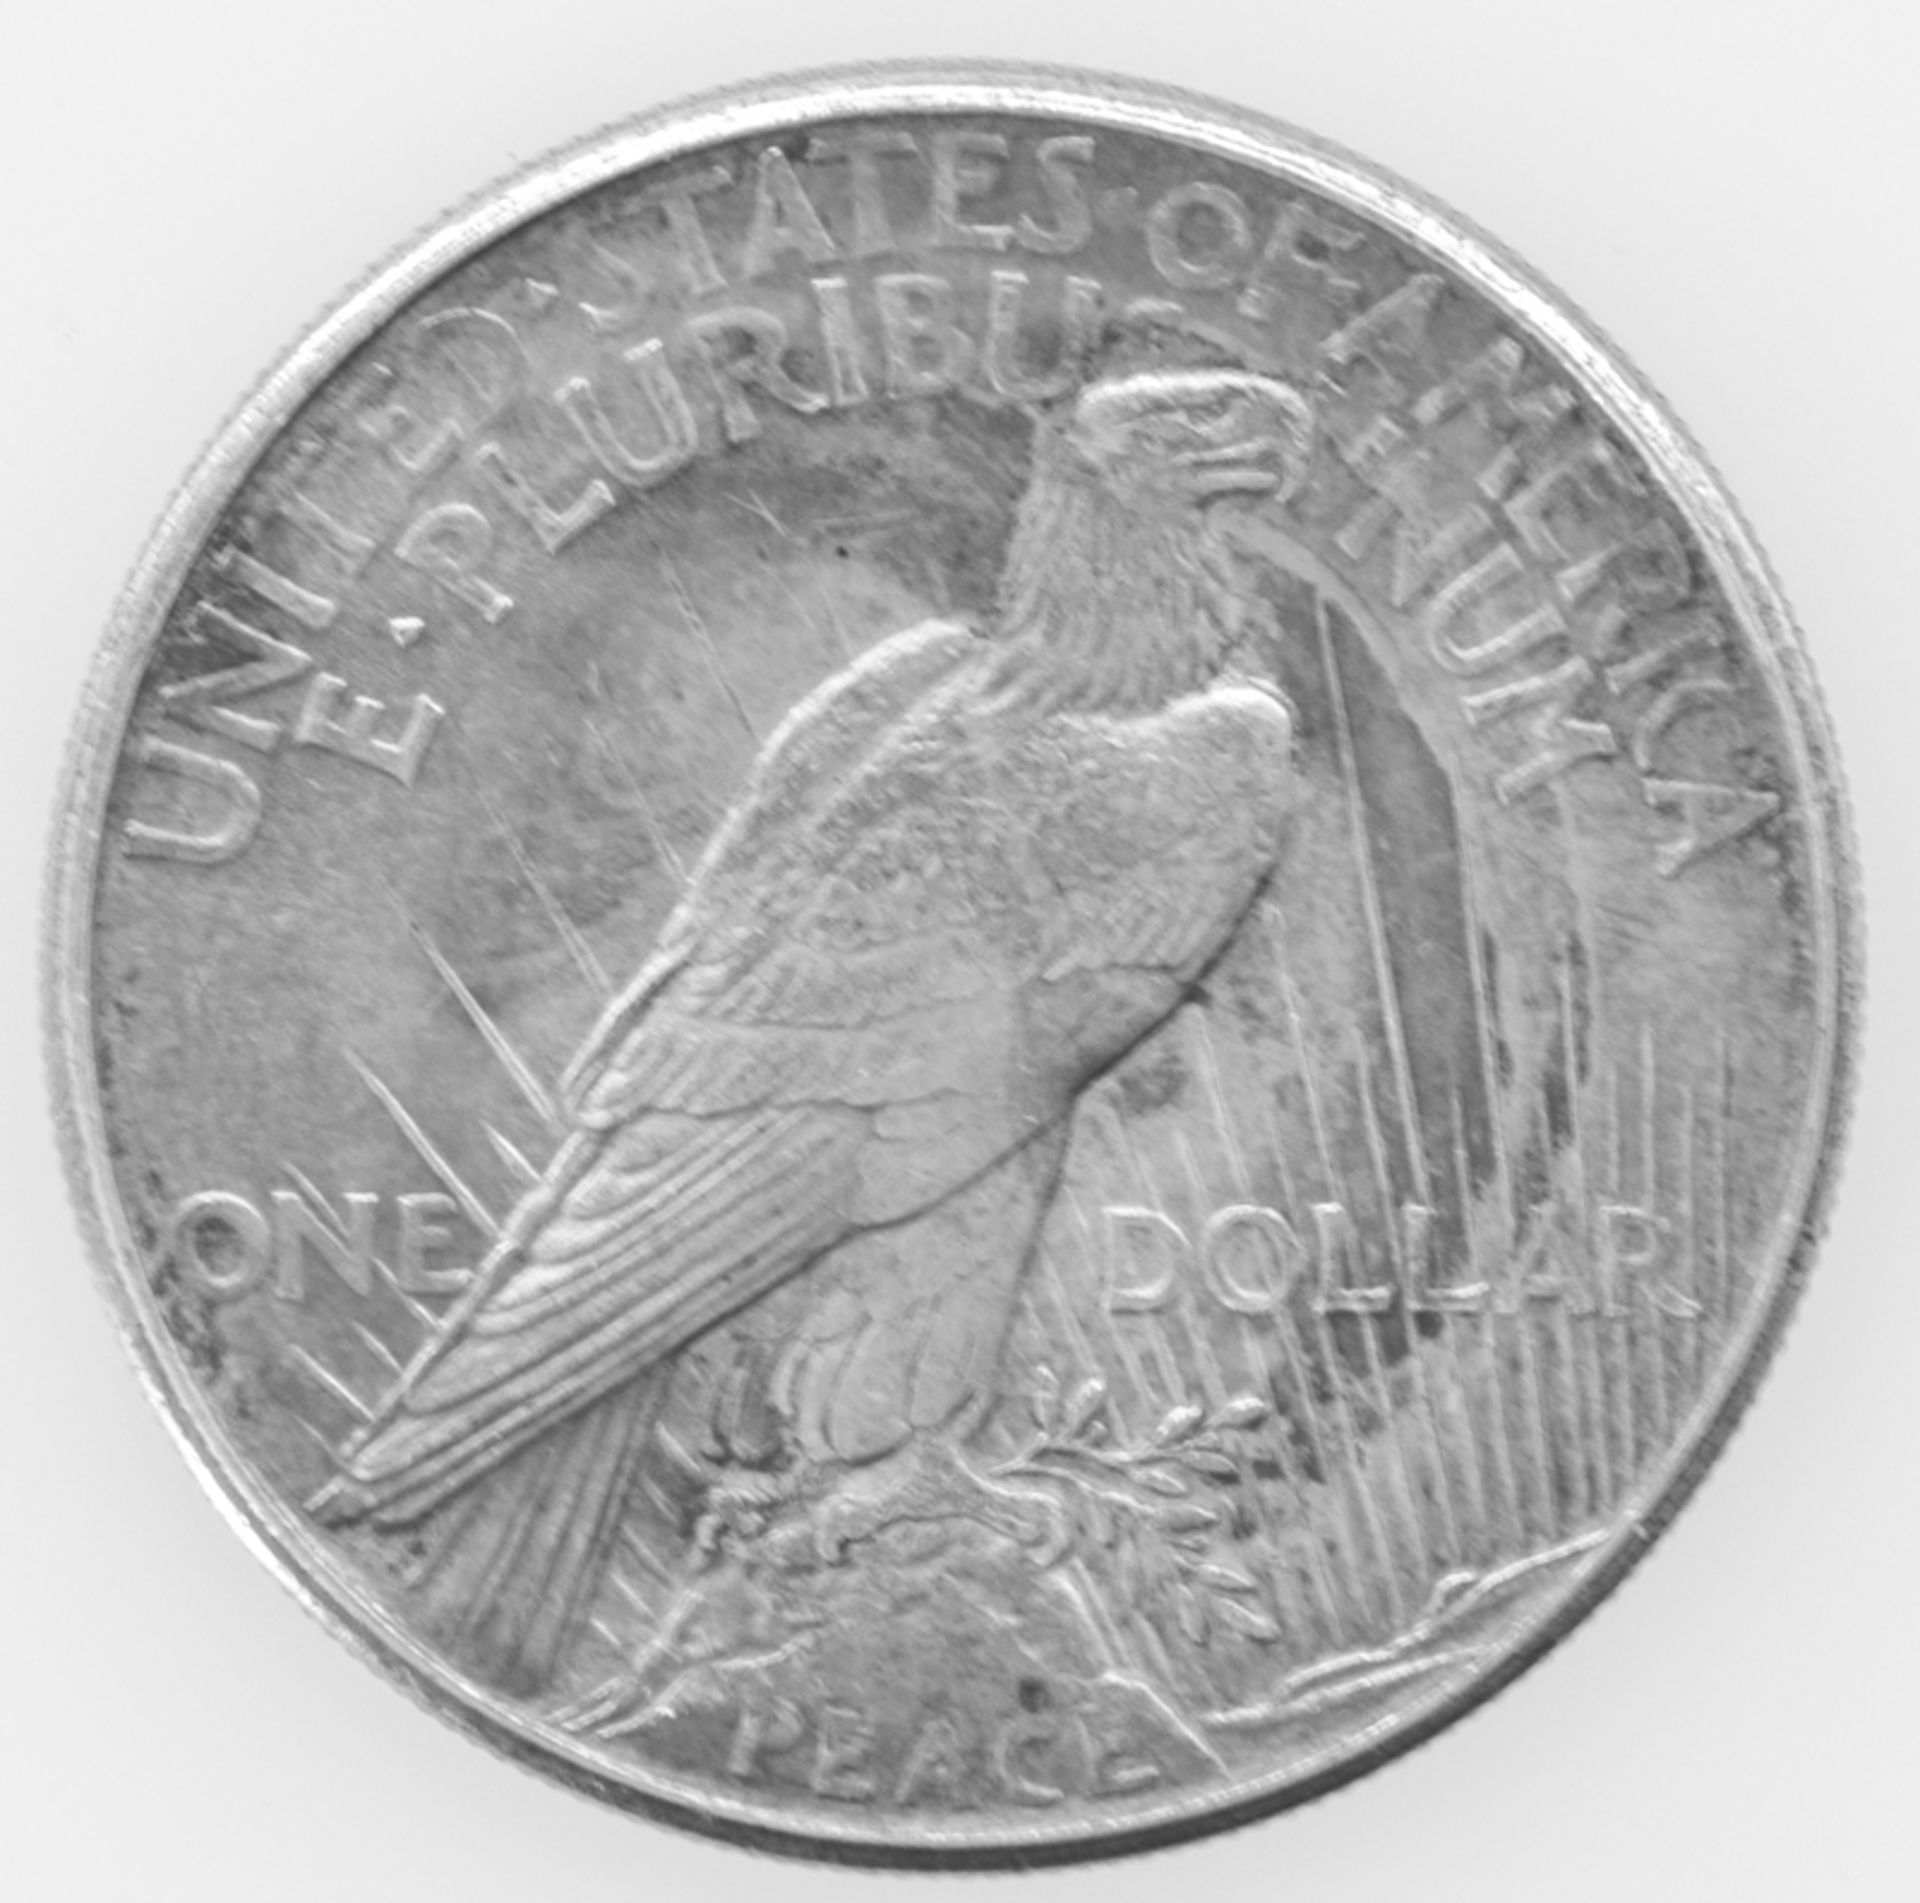 USA 1921, 1 Dollar, Morgan Dollar, Silber. Erhaltung: ss. - Bild 2 aus 2